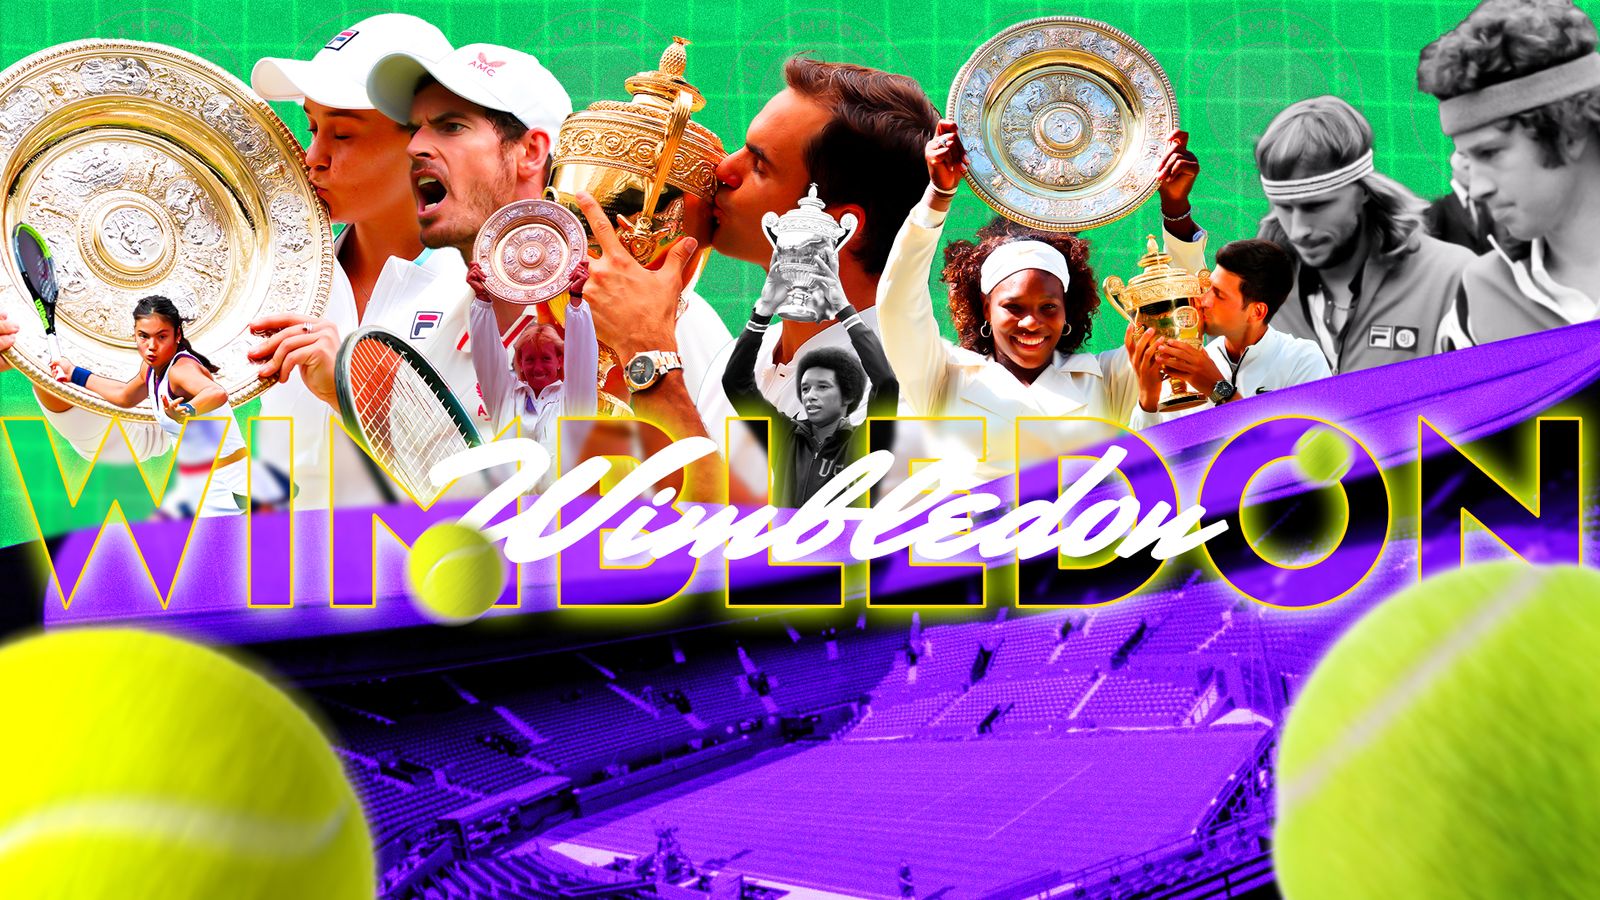 Wimbledon: Andy Murray, Emma Raducanu, Roger Federer, Serena Williams, Bjorn Borg, Martina Navratilova